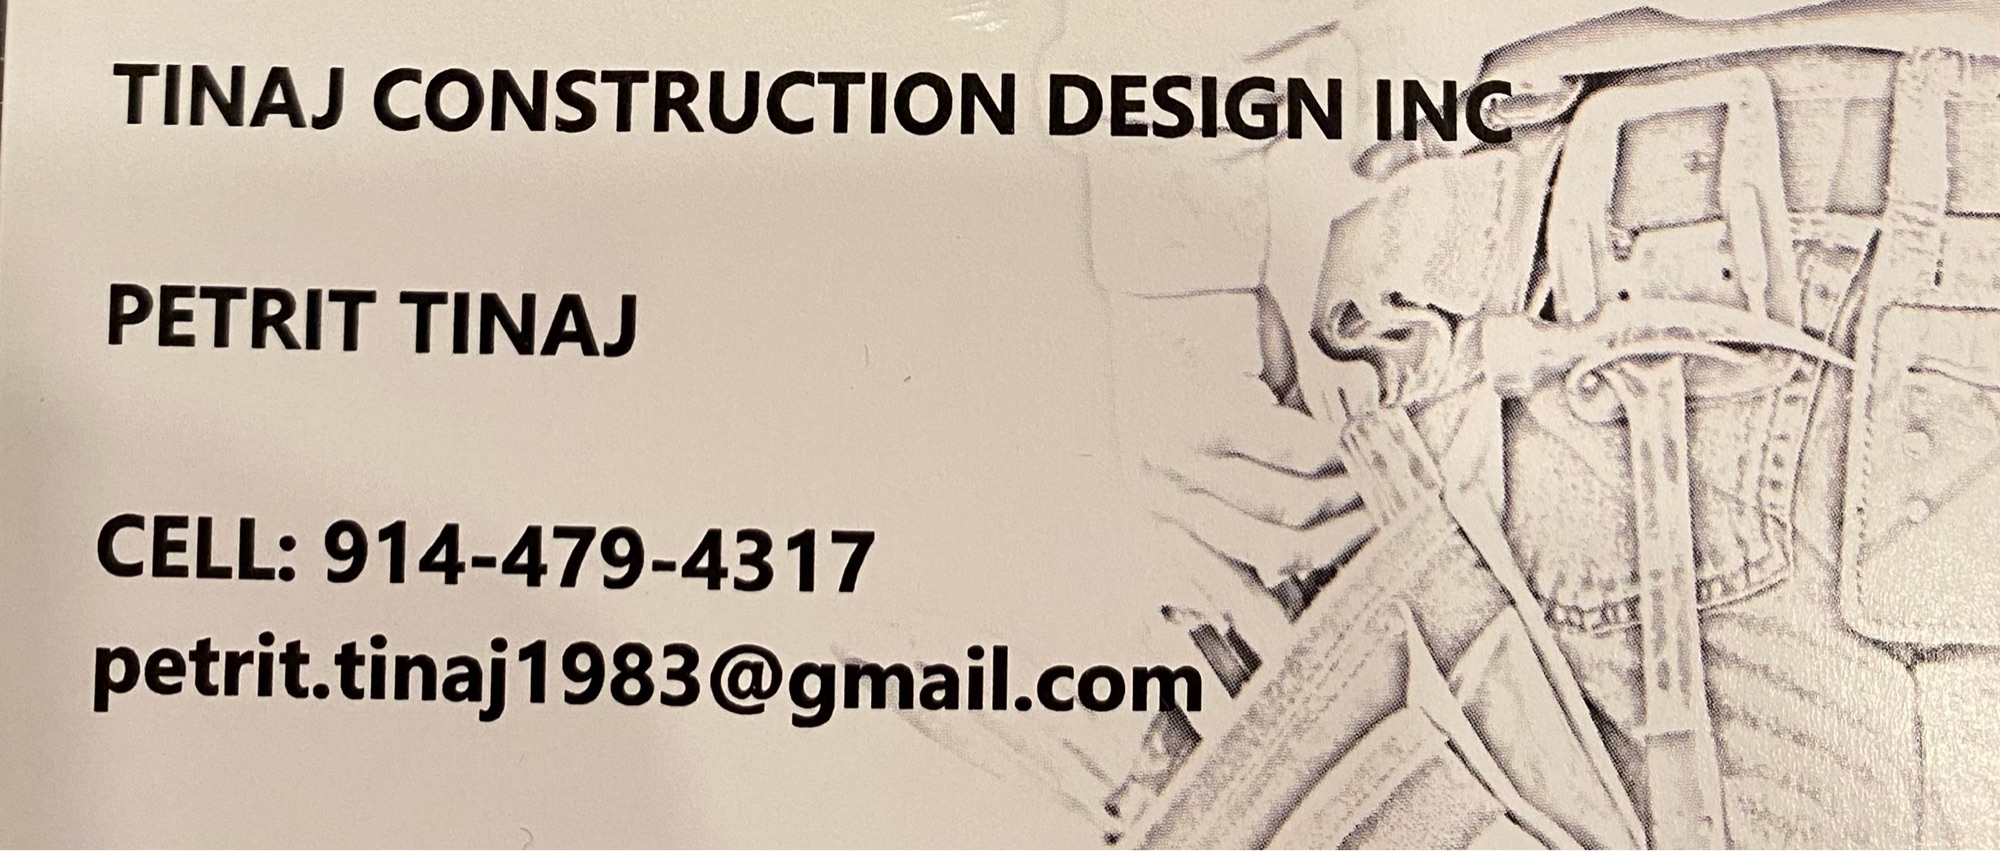 Tinaj Construction Design Inc Logo